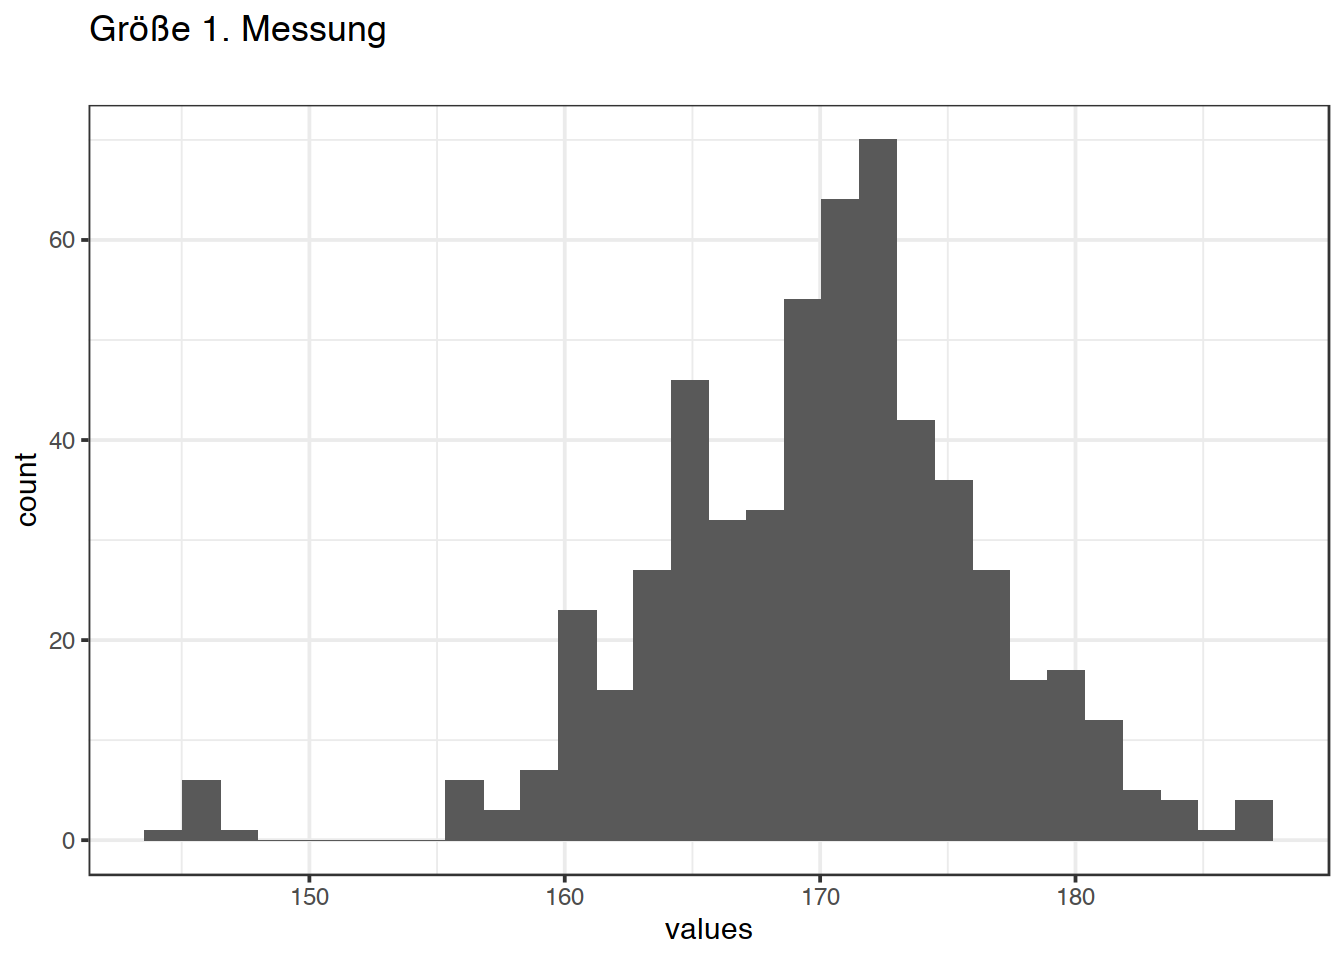 Distribution of values for Größe 1. Messung